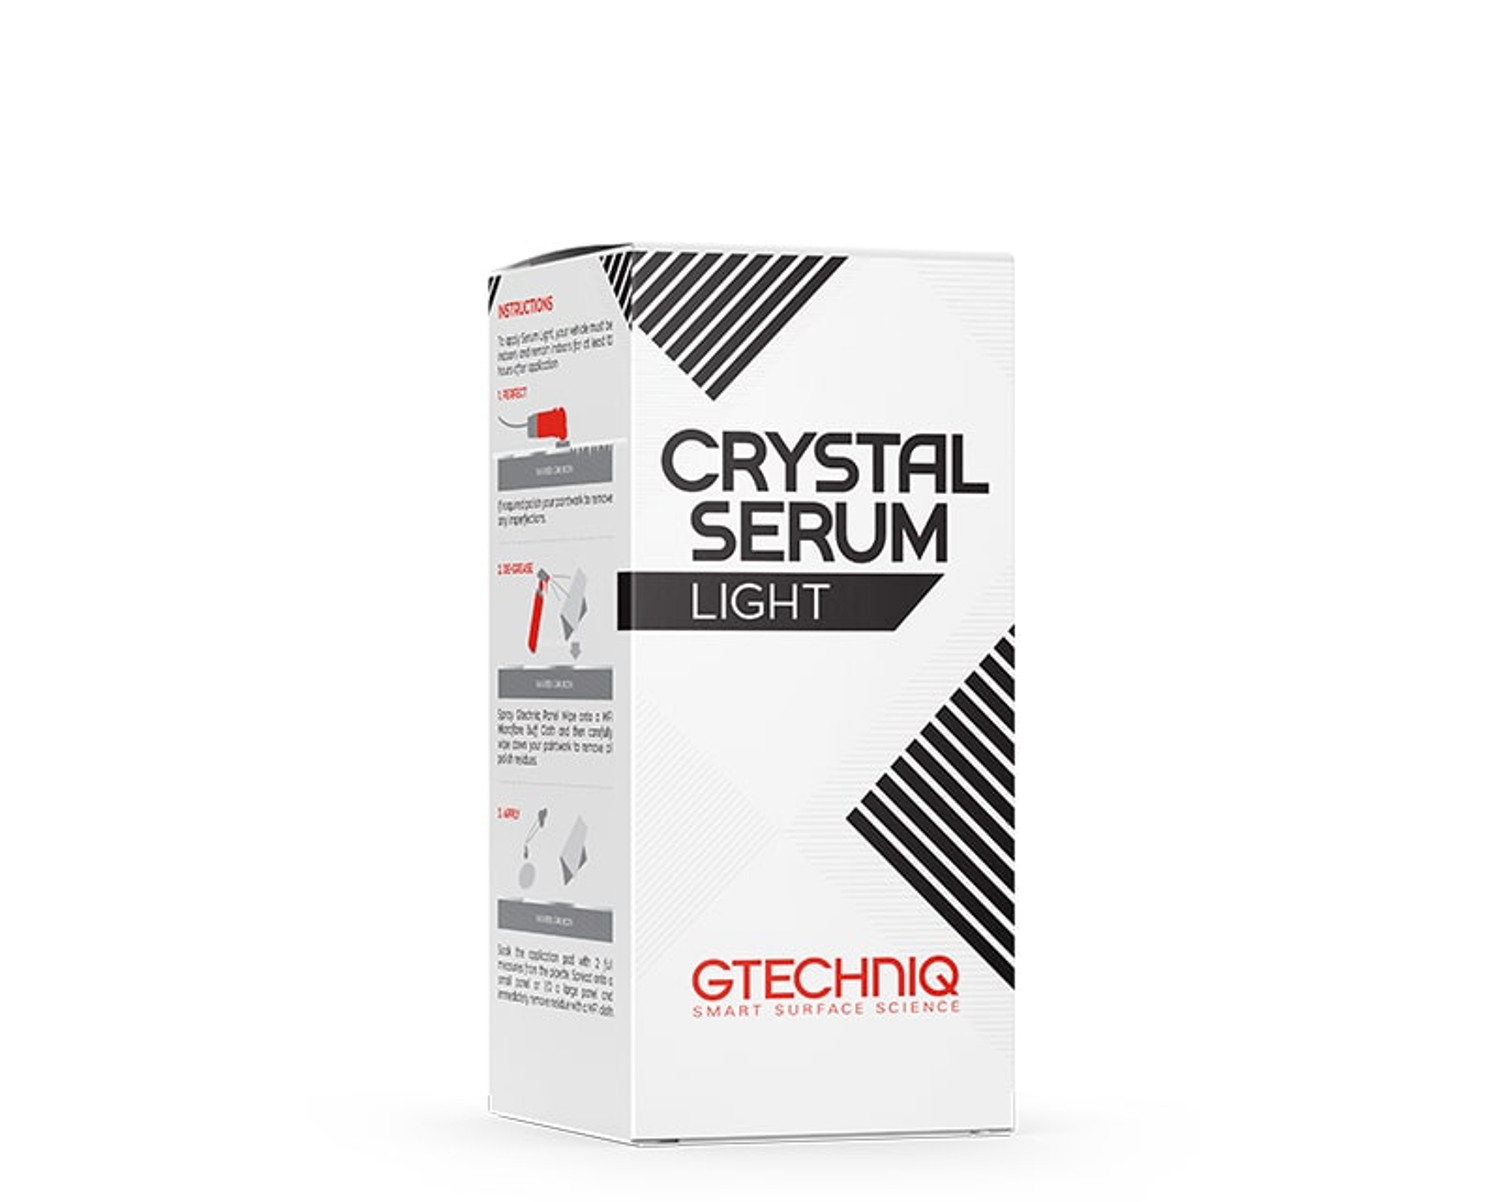 Review: Gtechniq Ceramic Coating (Crystal Serum Light)